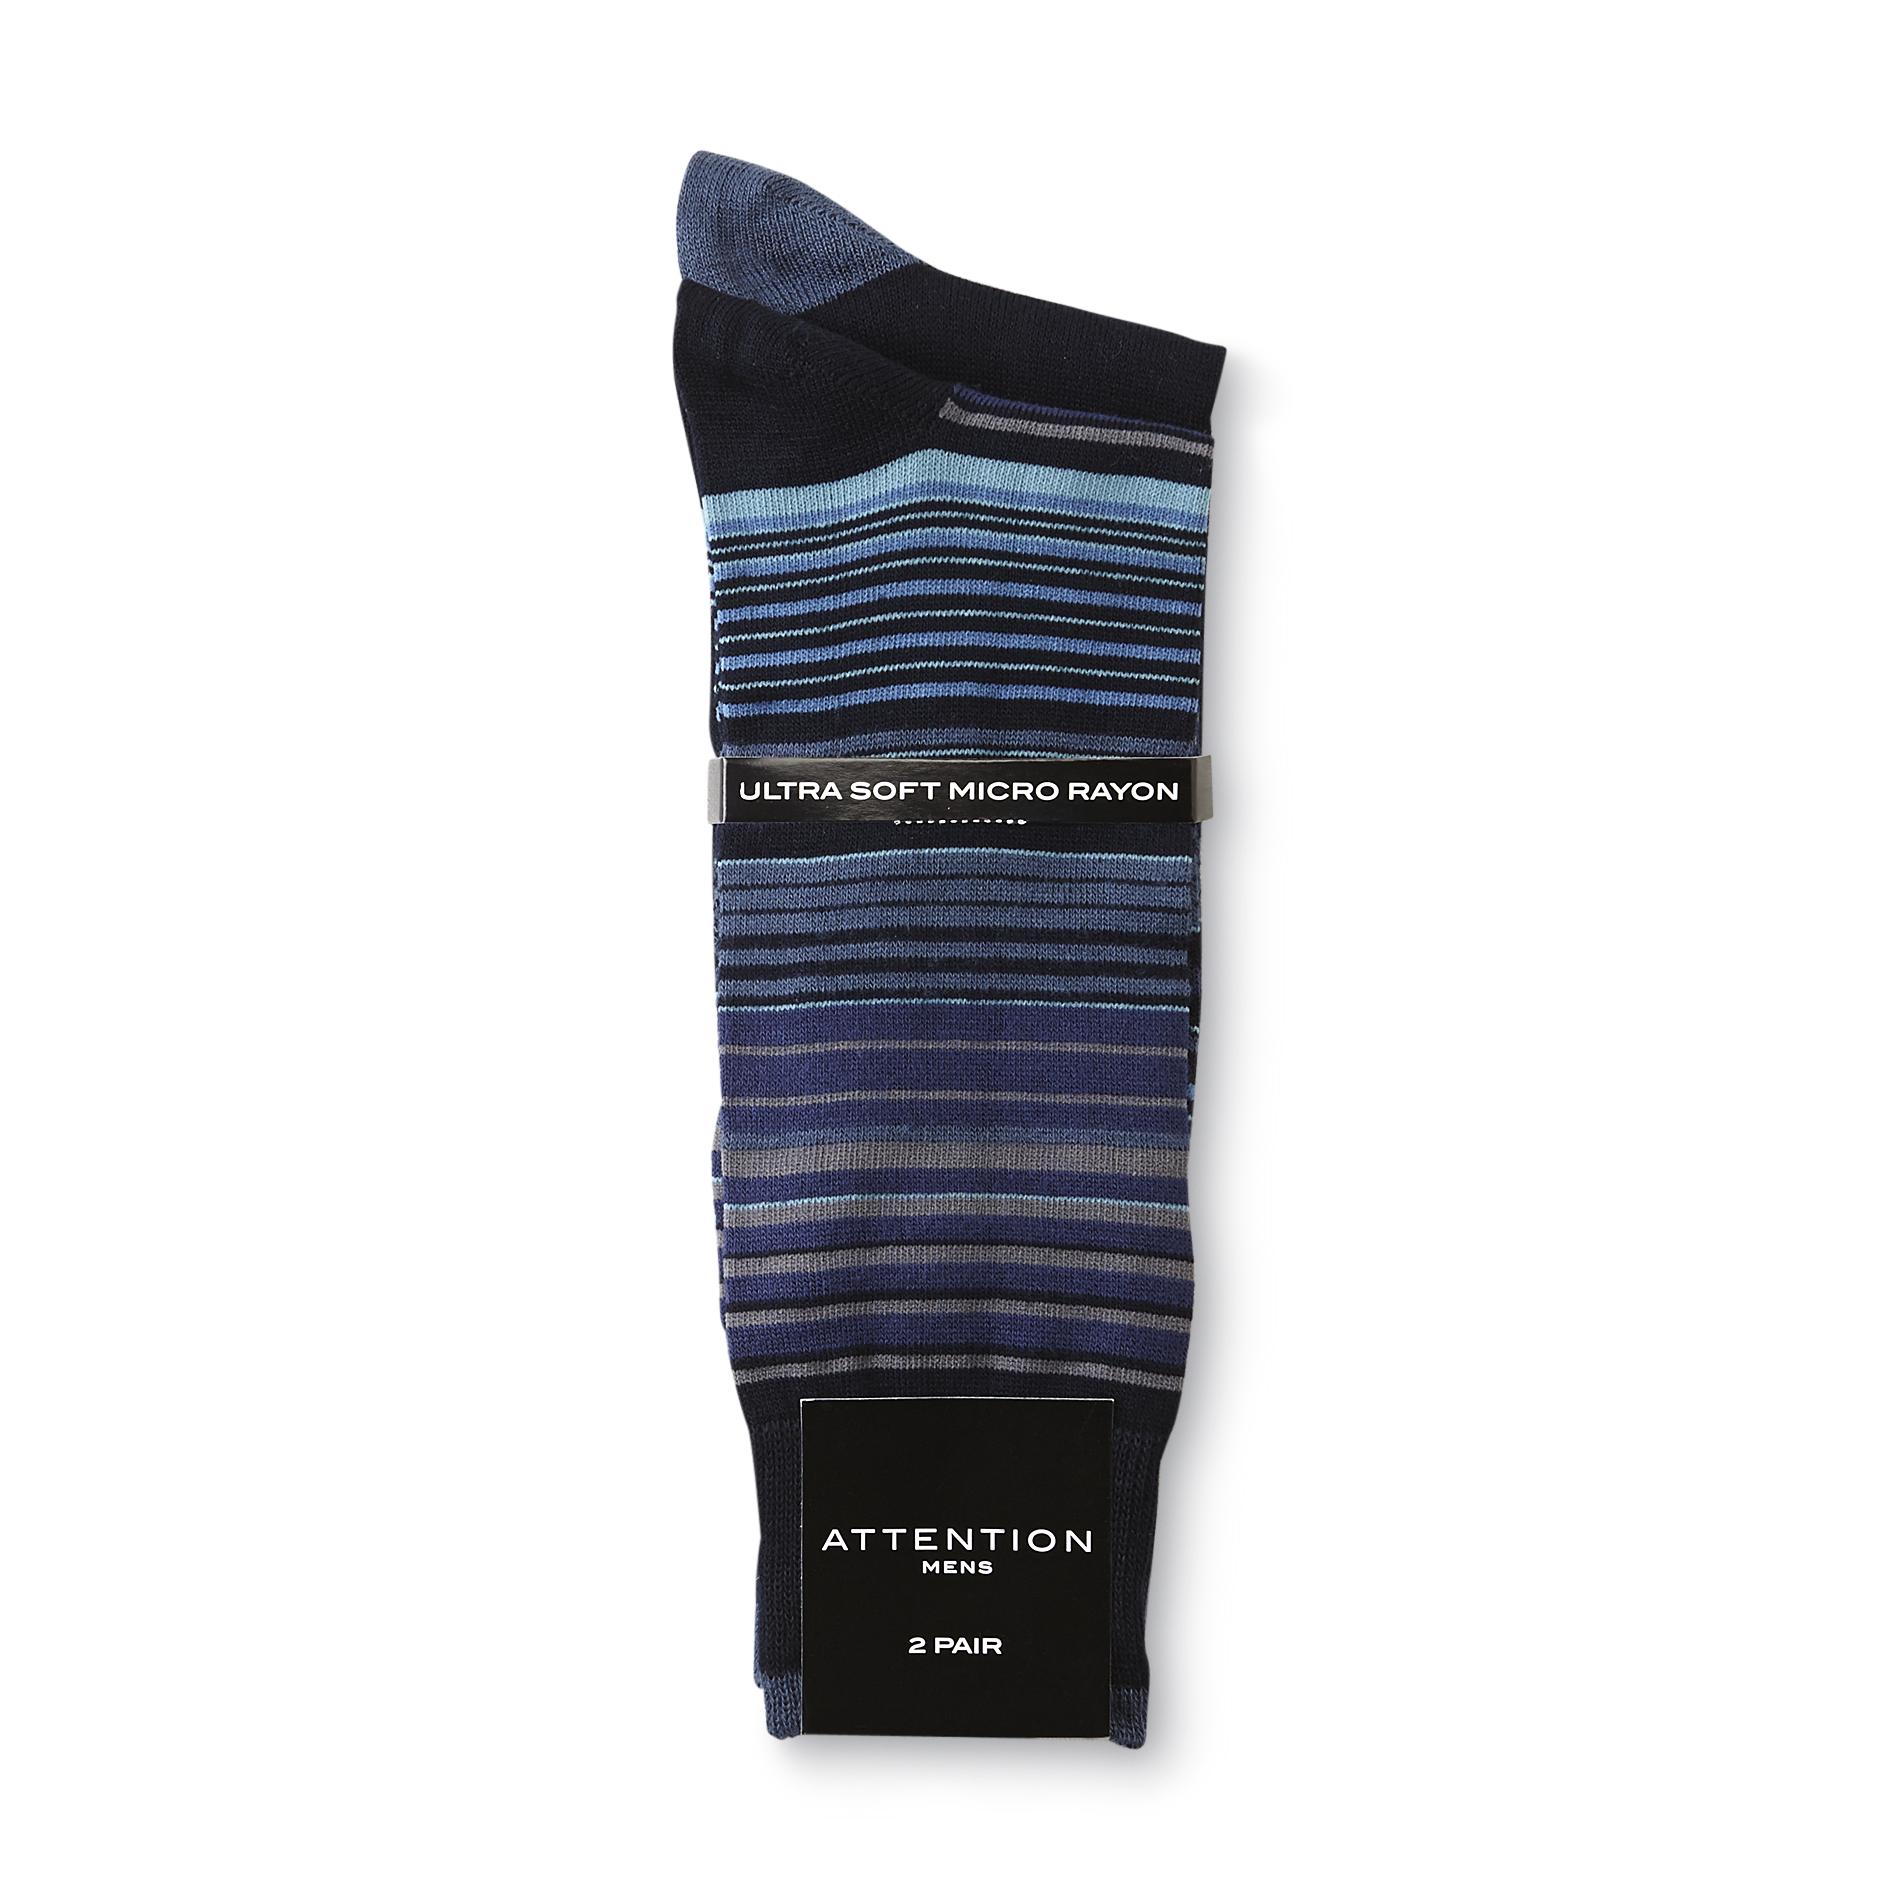 Attention Men's 2-Pairs Dress Socks - Striped & Colorblock